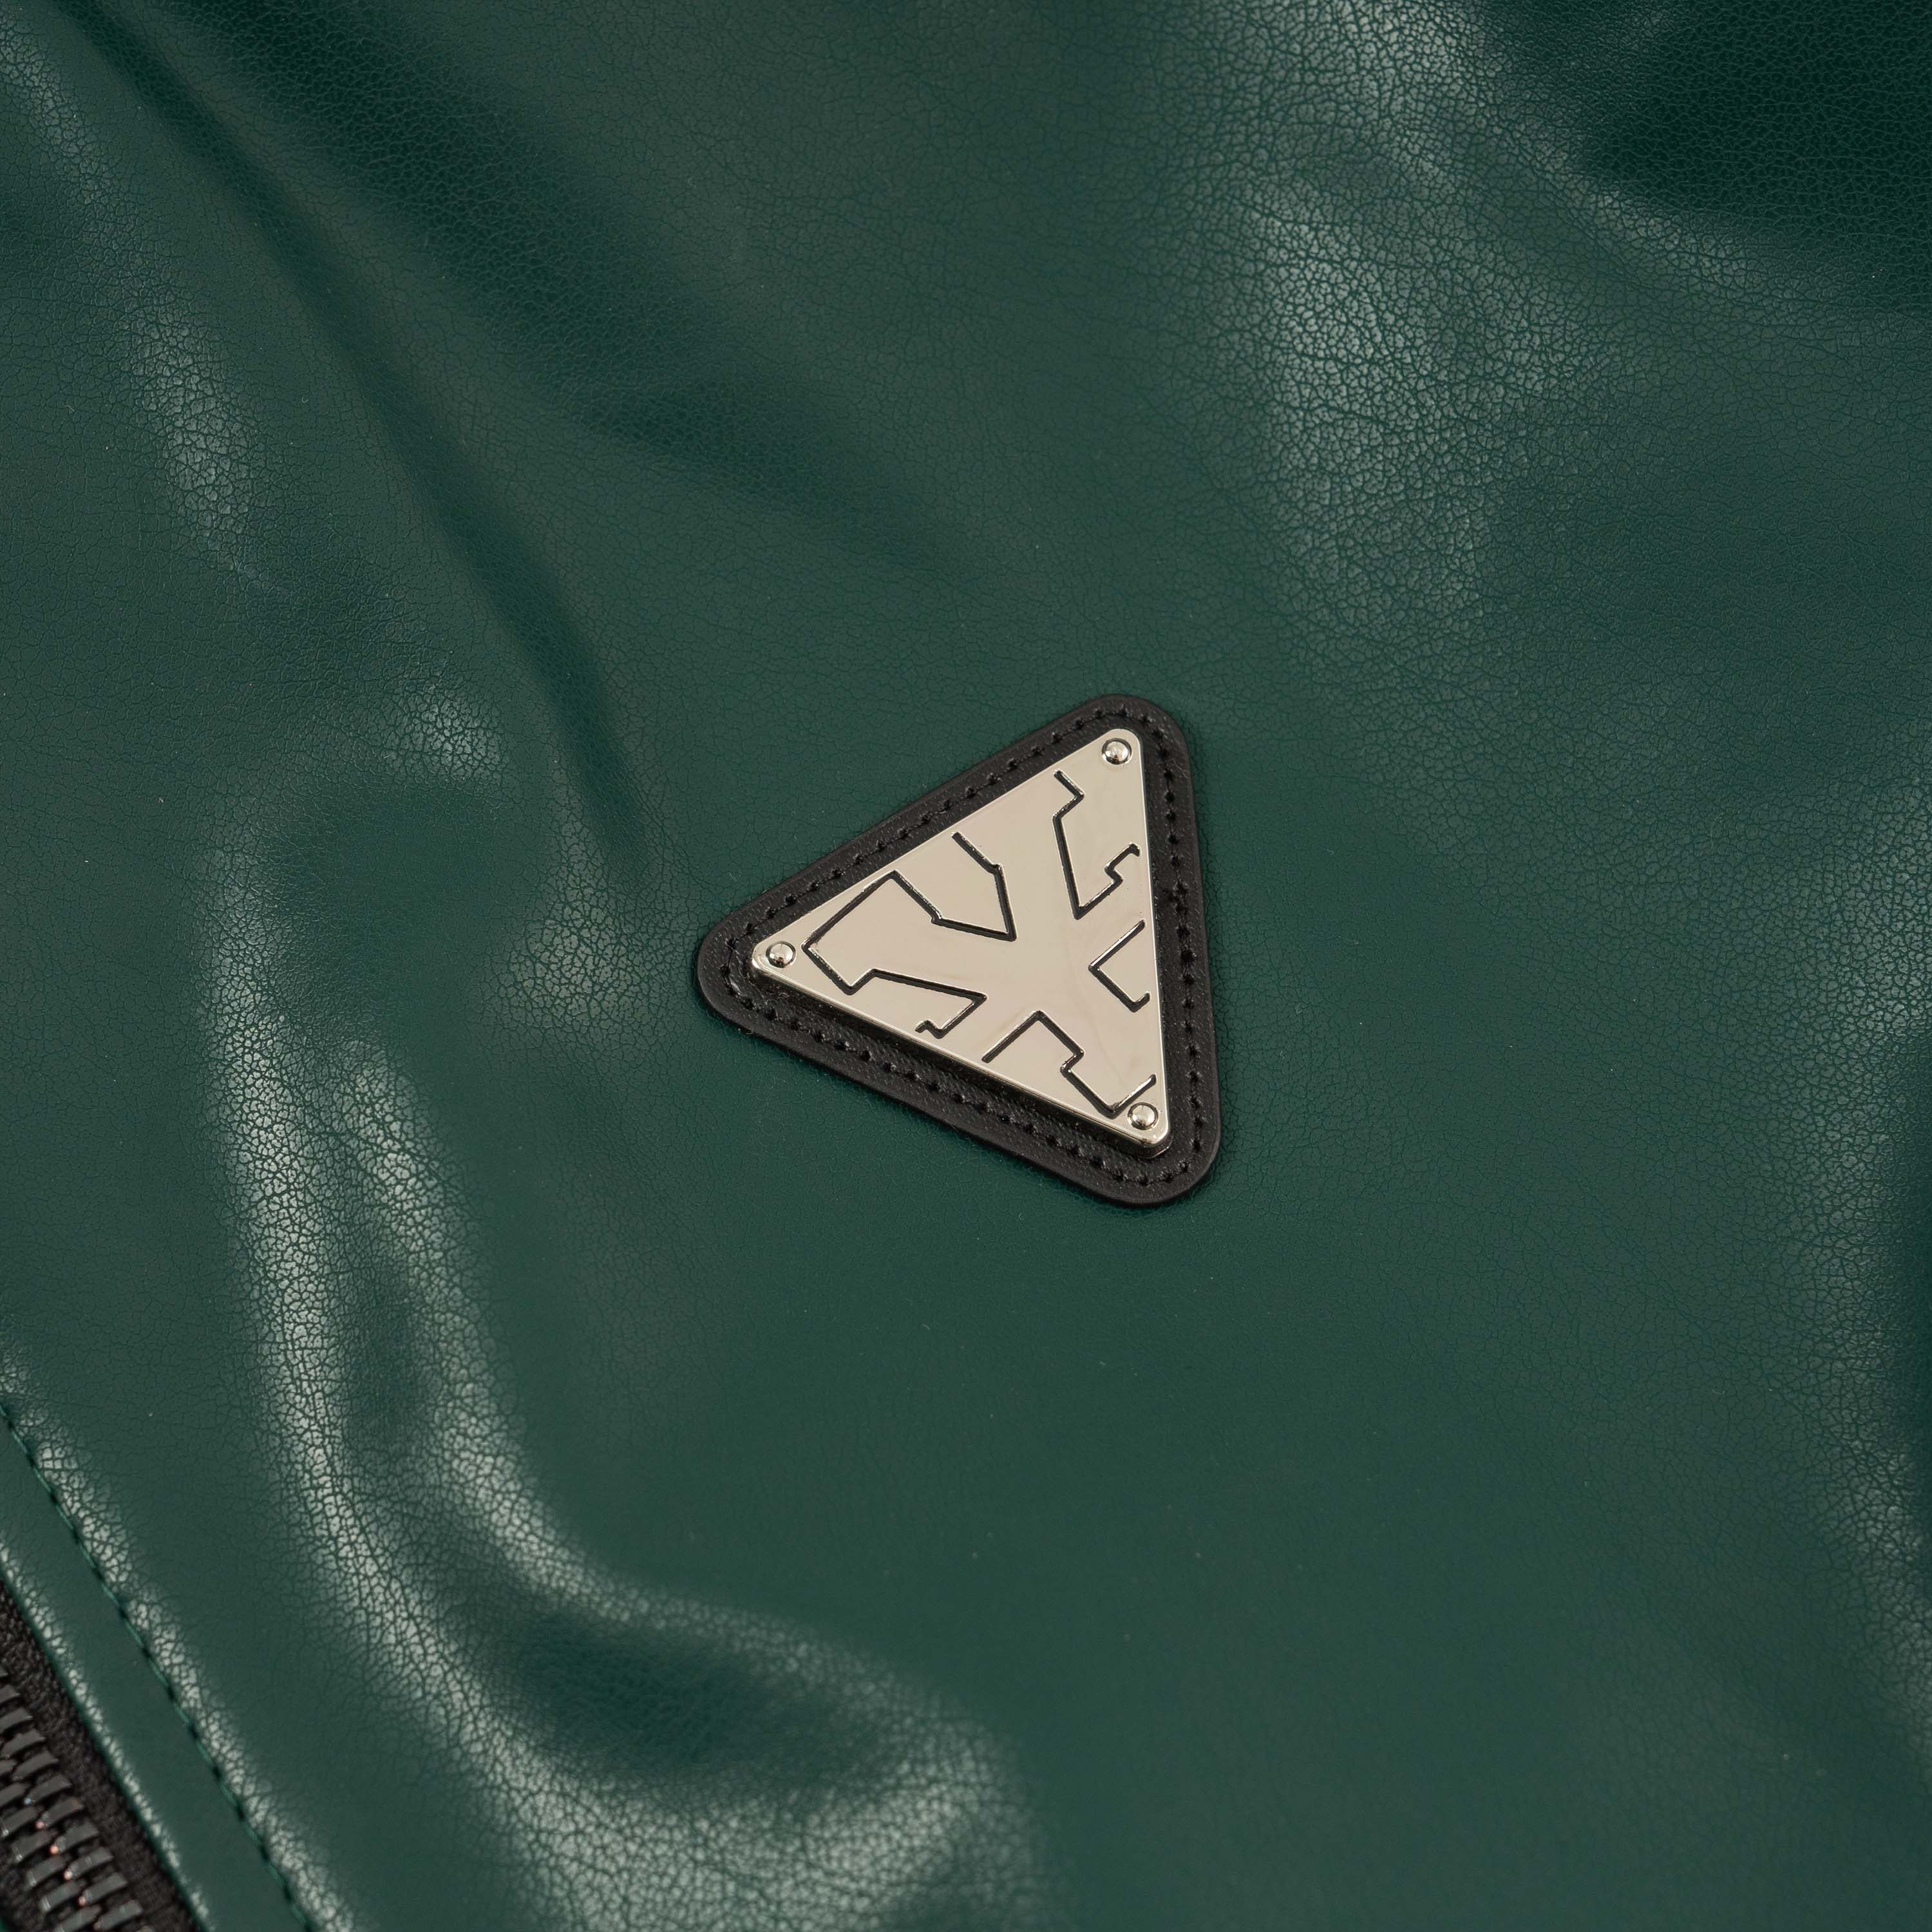 Metal Label Leather Jacket - Green